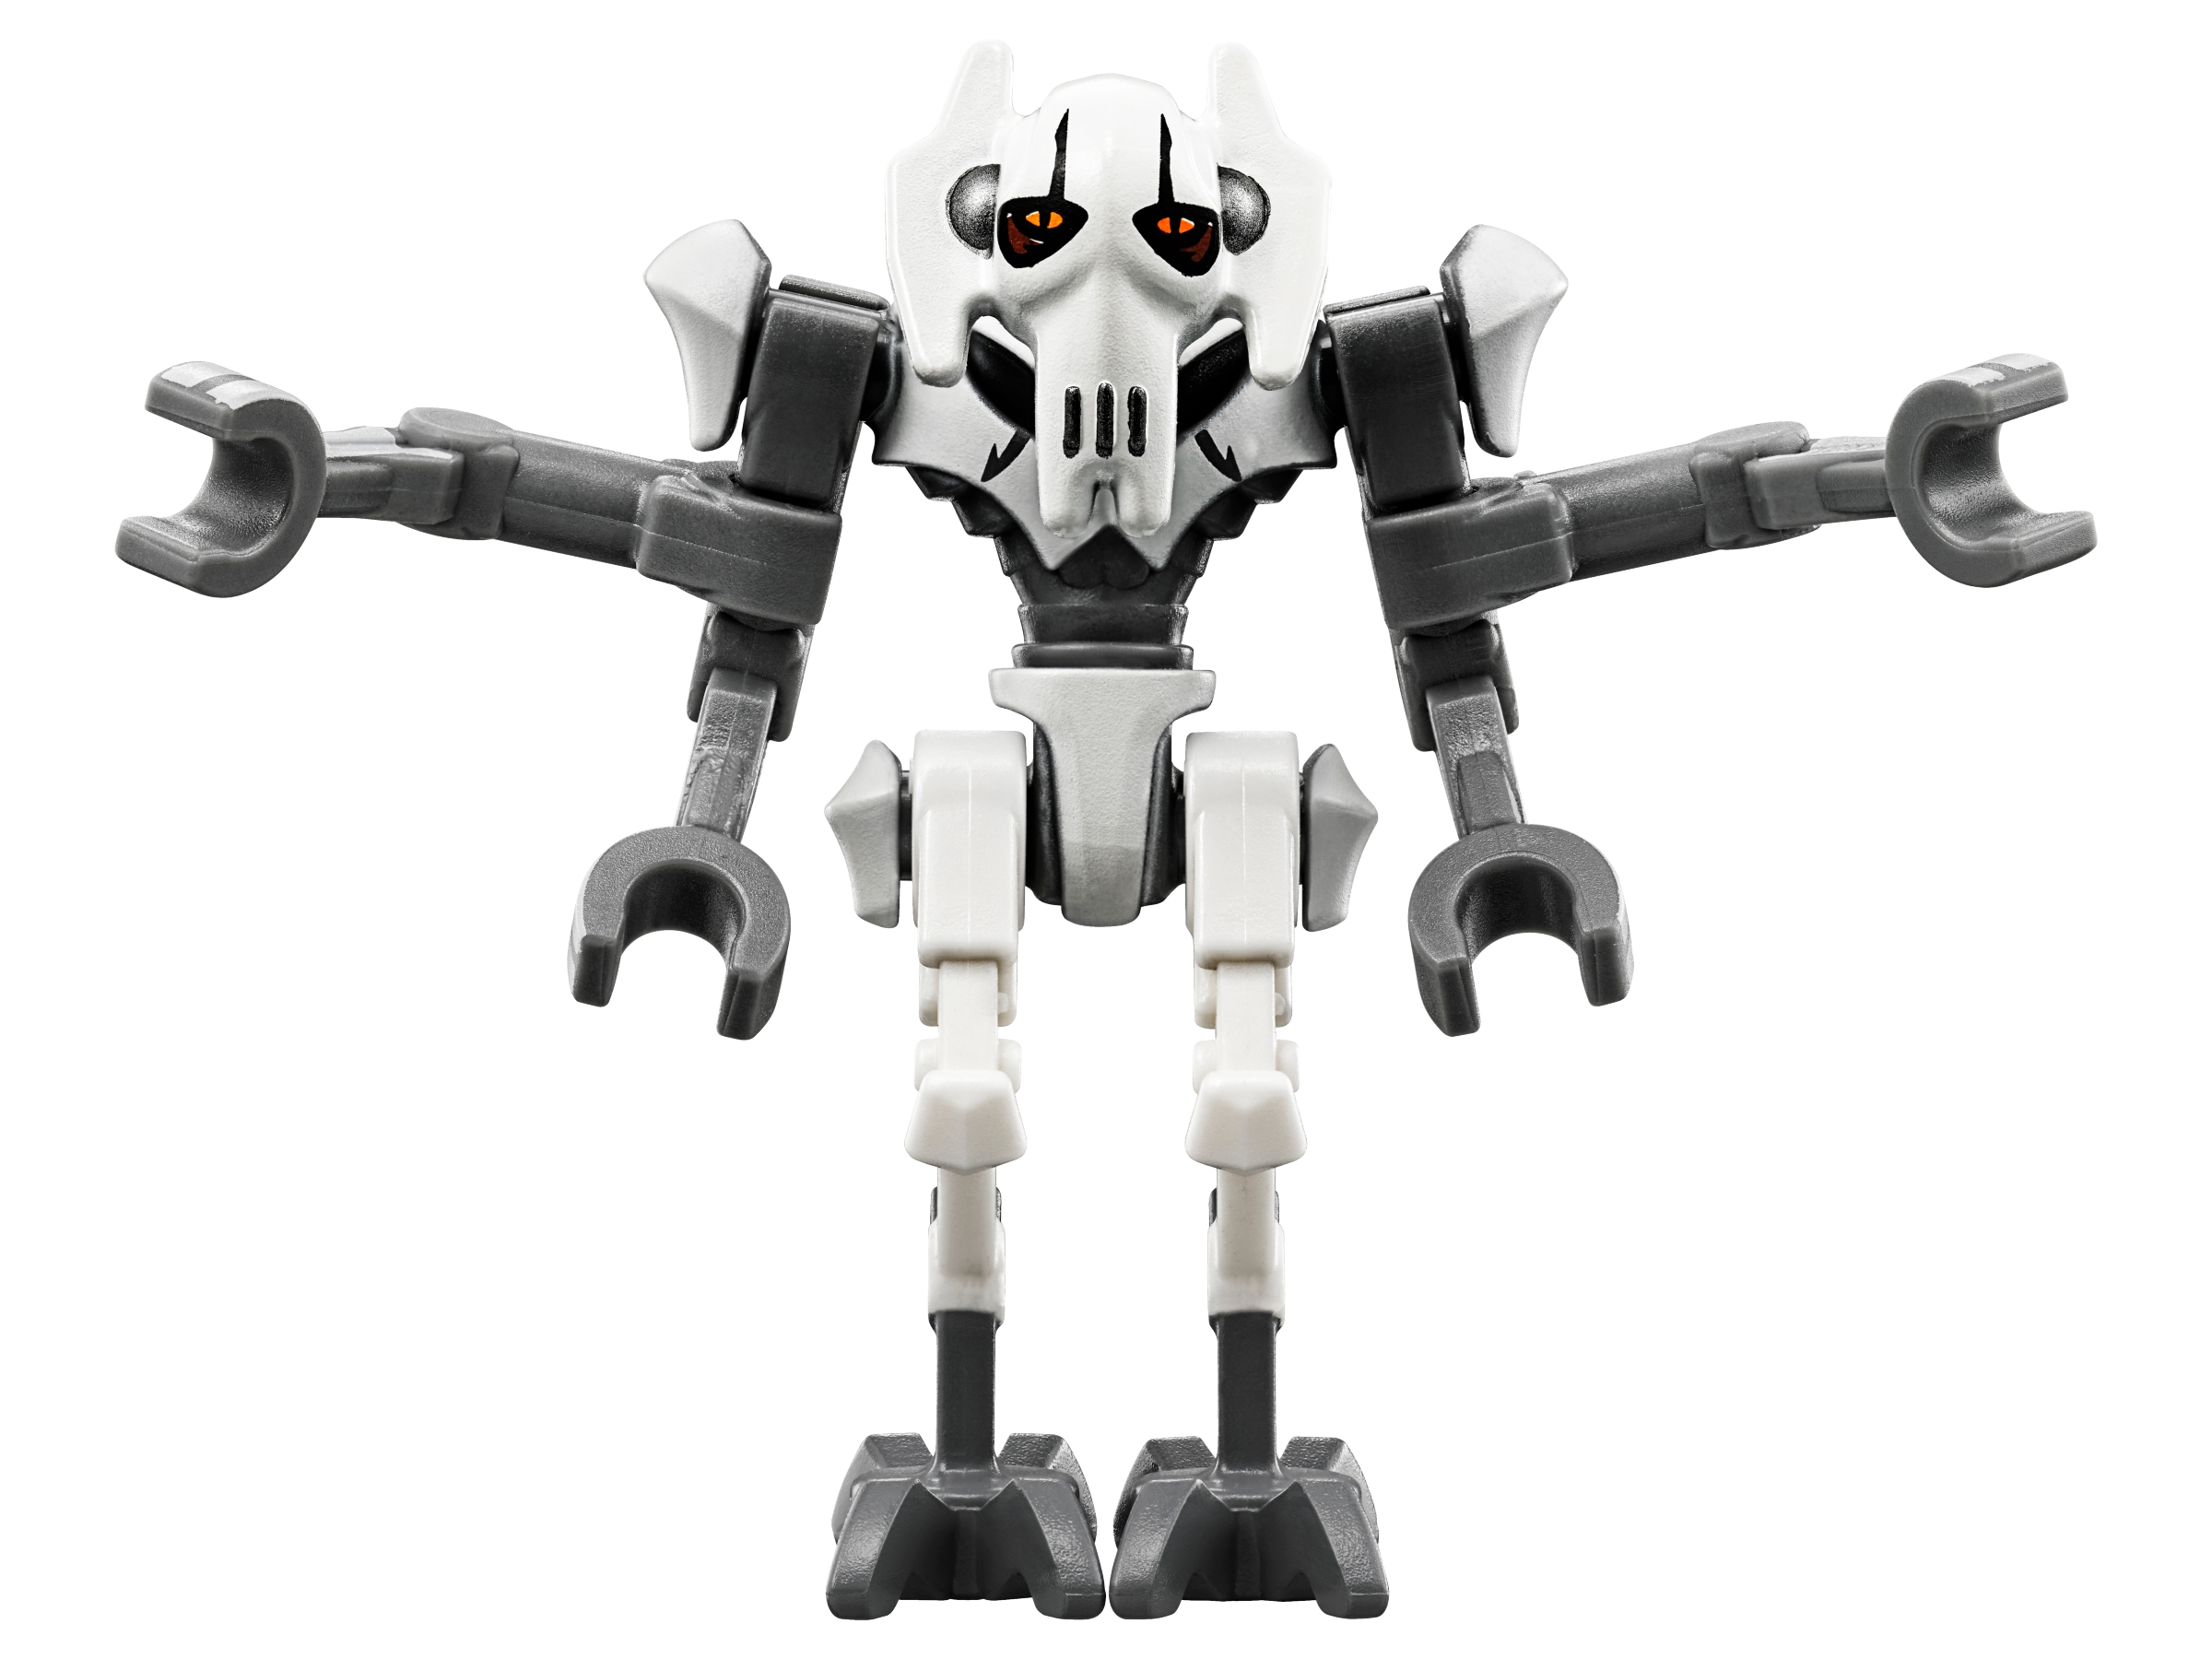 GENUINE Star Wars LEGO Minifigure sw515 GENERAL GRIEVOUS 75040 75199 CLONE WARS! 